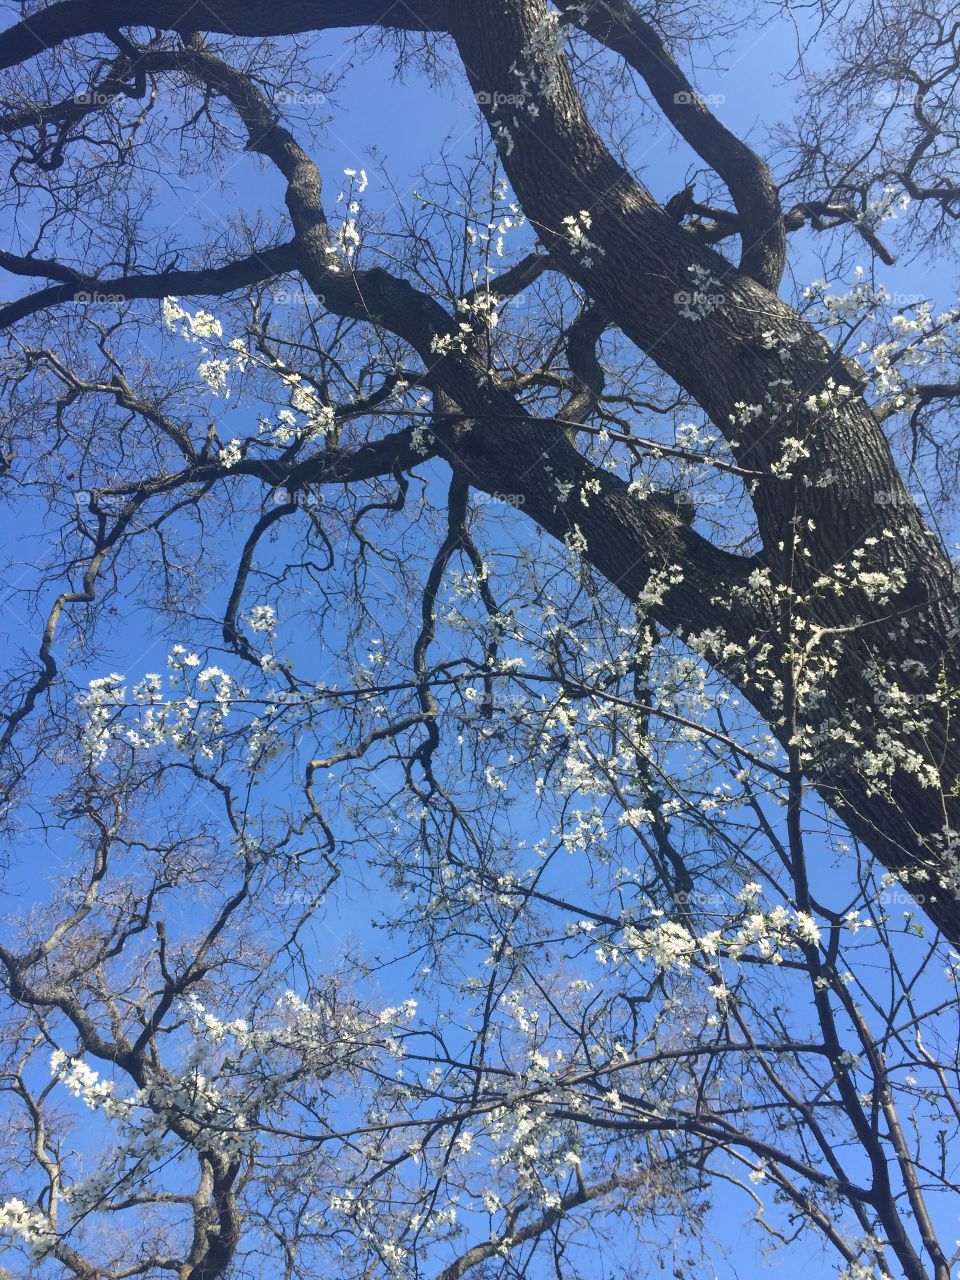 Delightful white blossoms beneath a clear blue sky. 